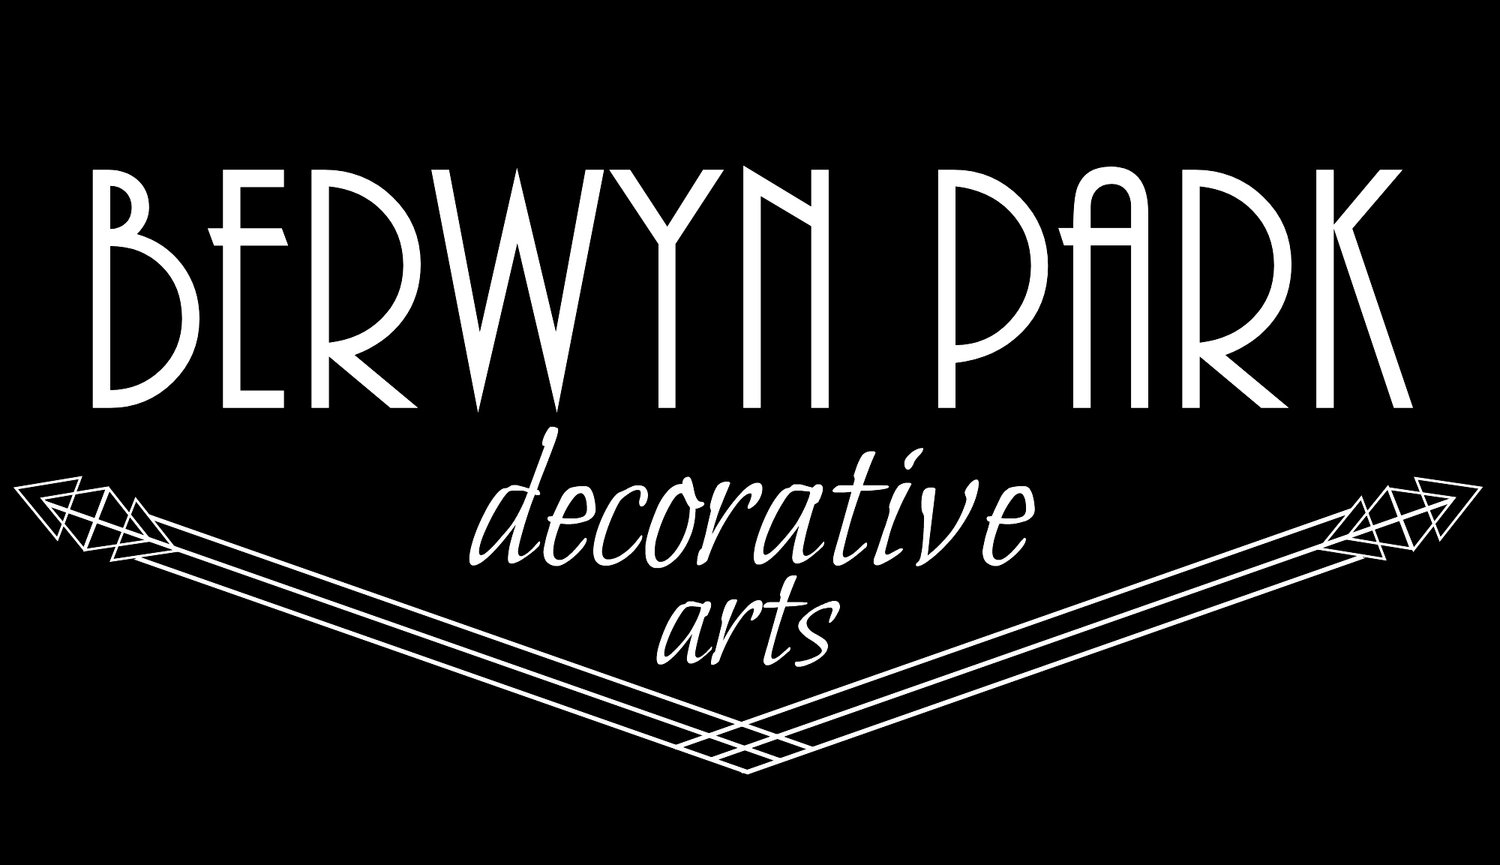 Berwyn Park Decorative Arts